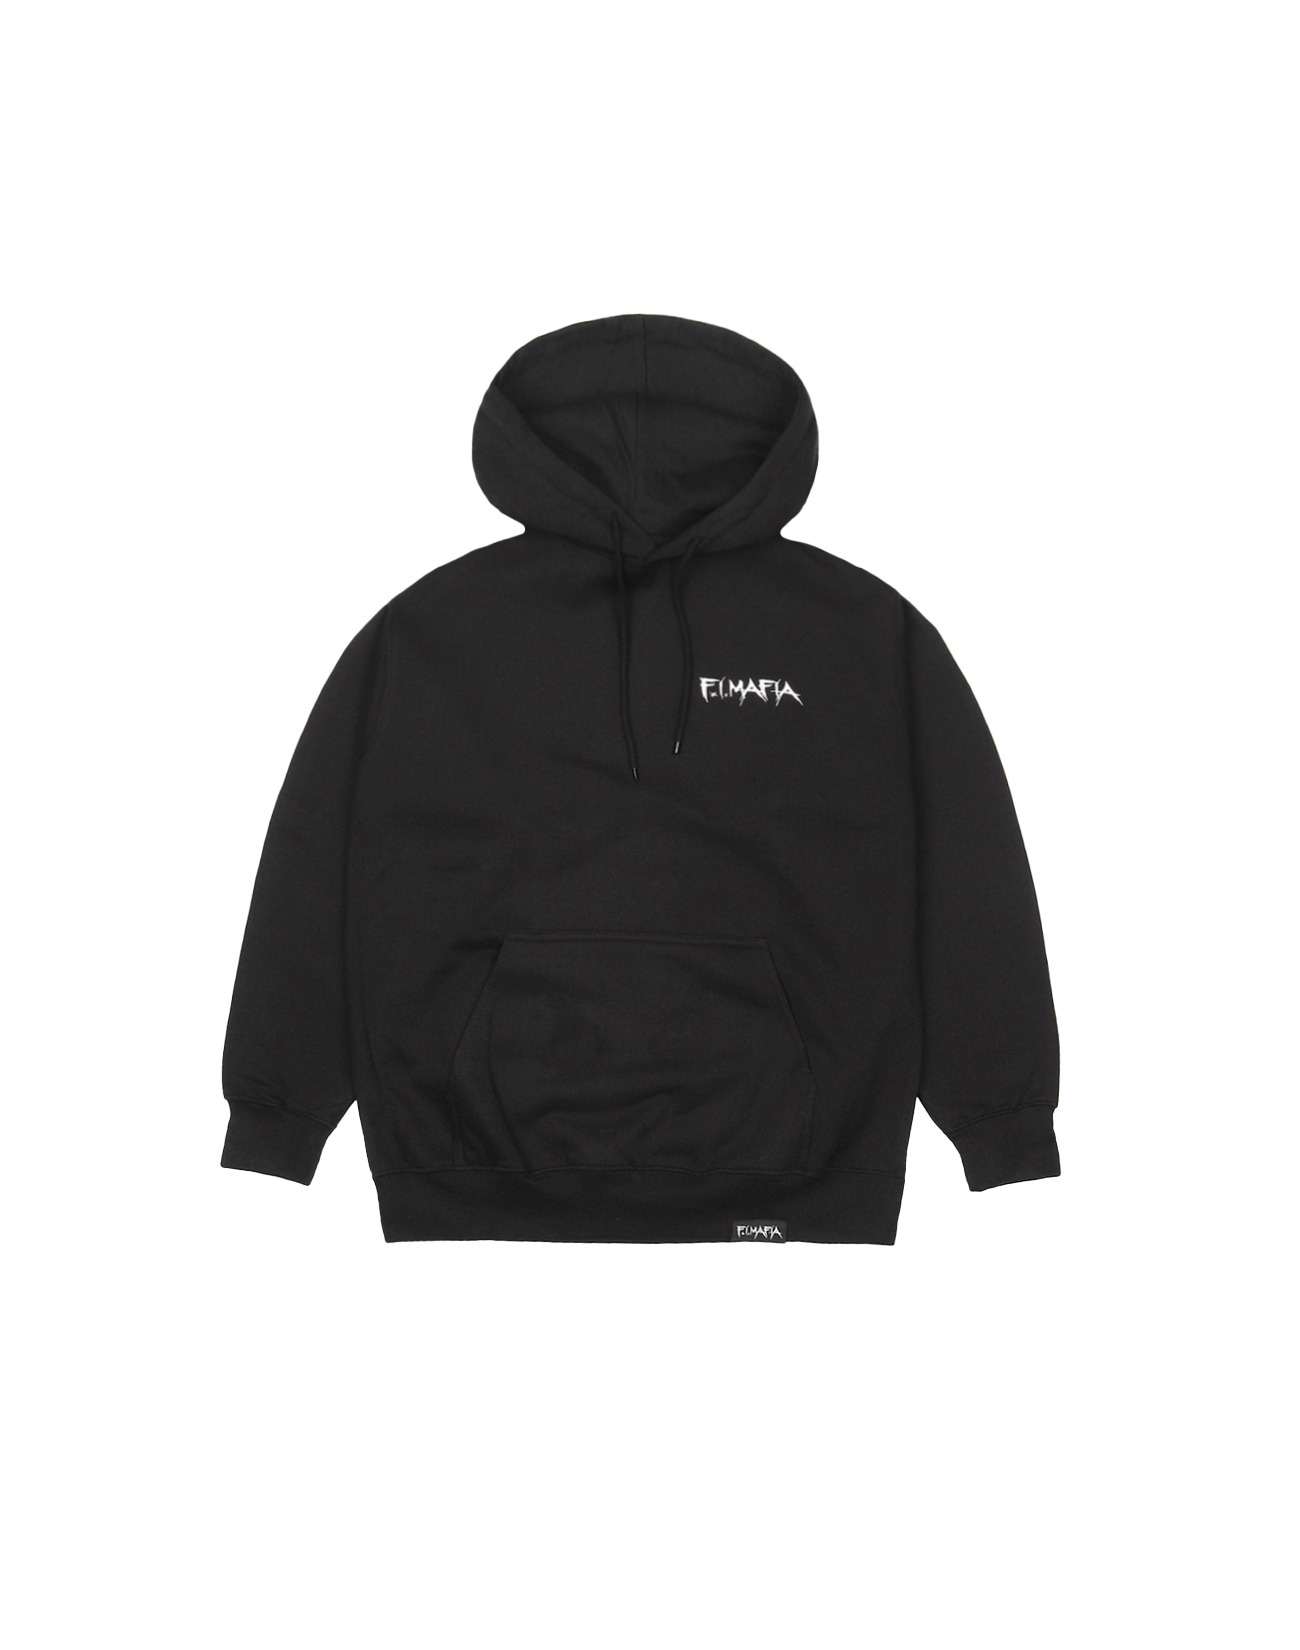 MAF hoodie black 사이즈 M (위클리 세일 제품), F.I.MAFIA, FIMAFIA, SNOWBOARD, 스노우보드